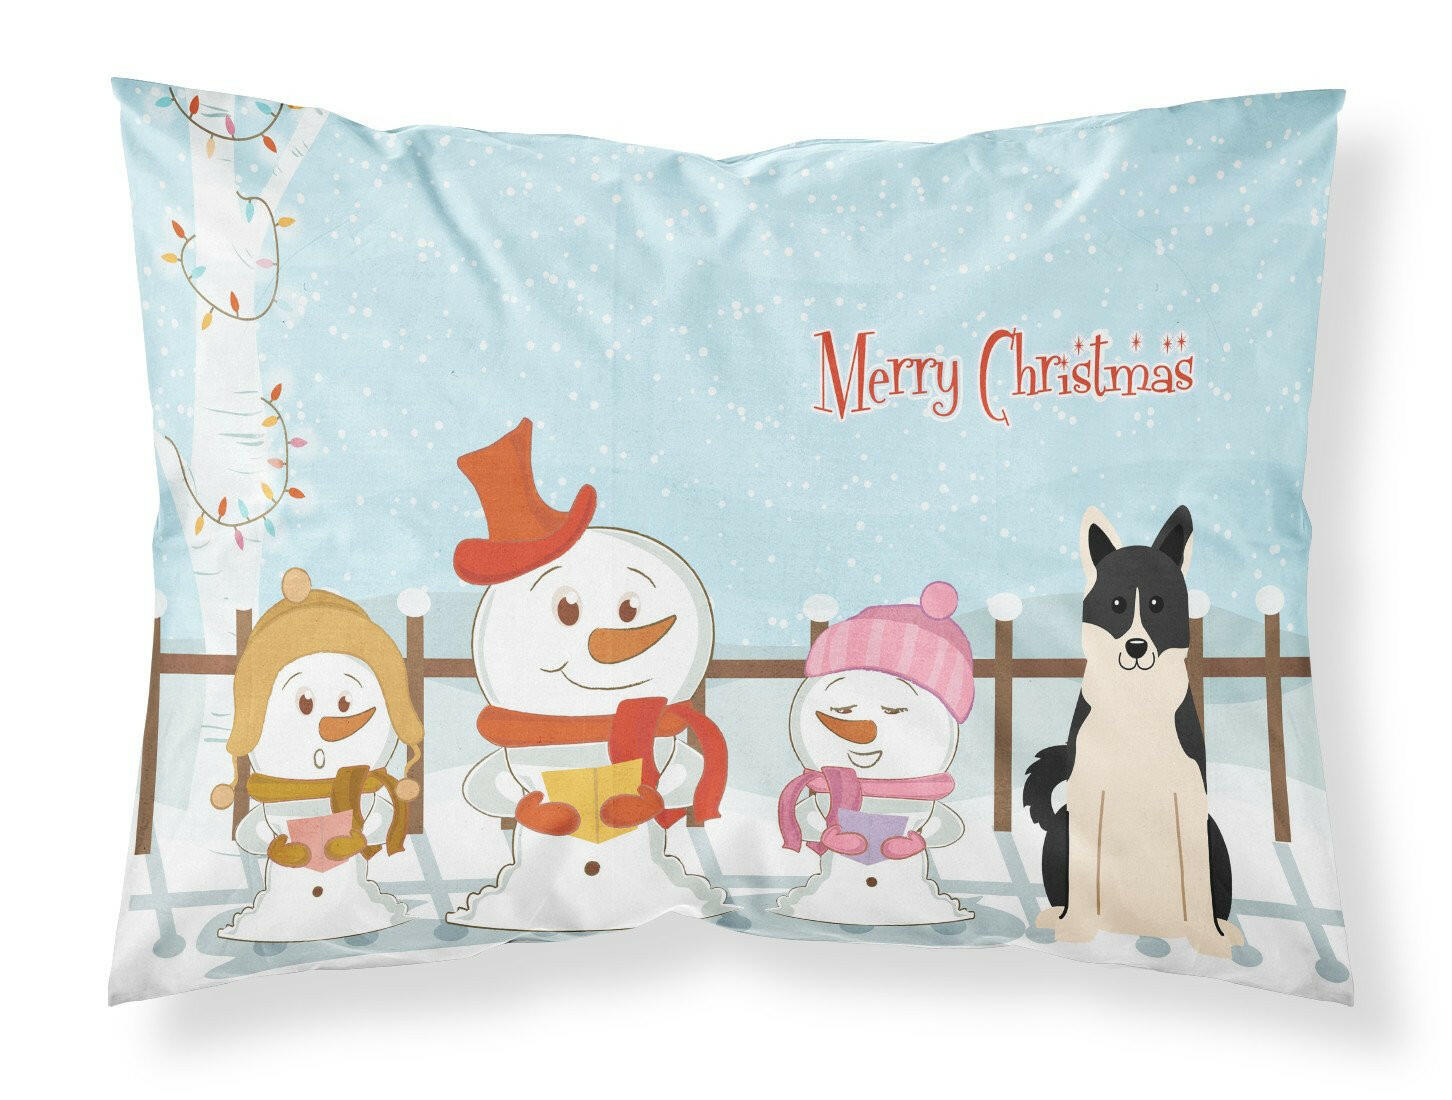 Merry Christmas Carolers Russo-European Laika Spitz Fabric Standard Pillowcase BB2360PILLOWCASE by Caroline's Treasures